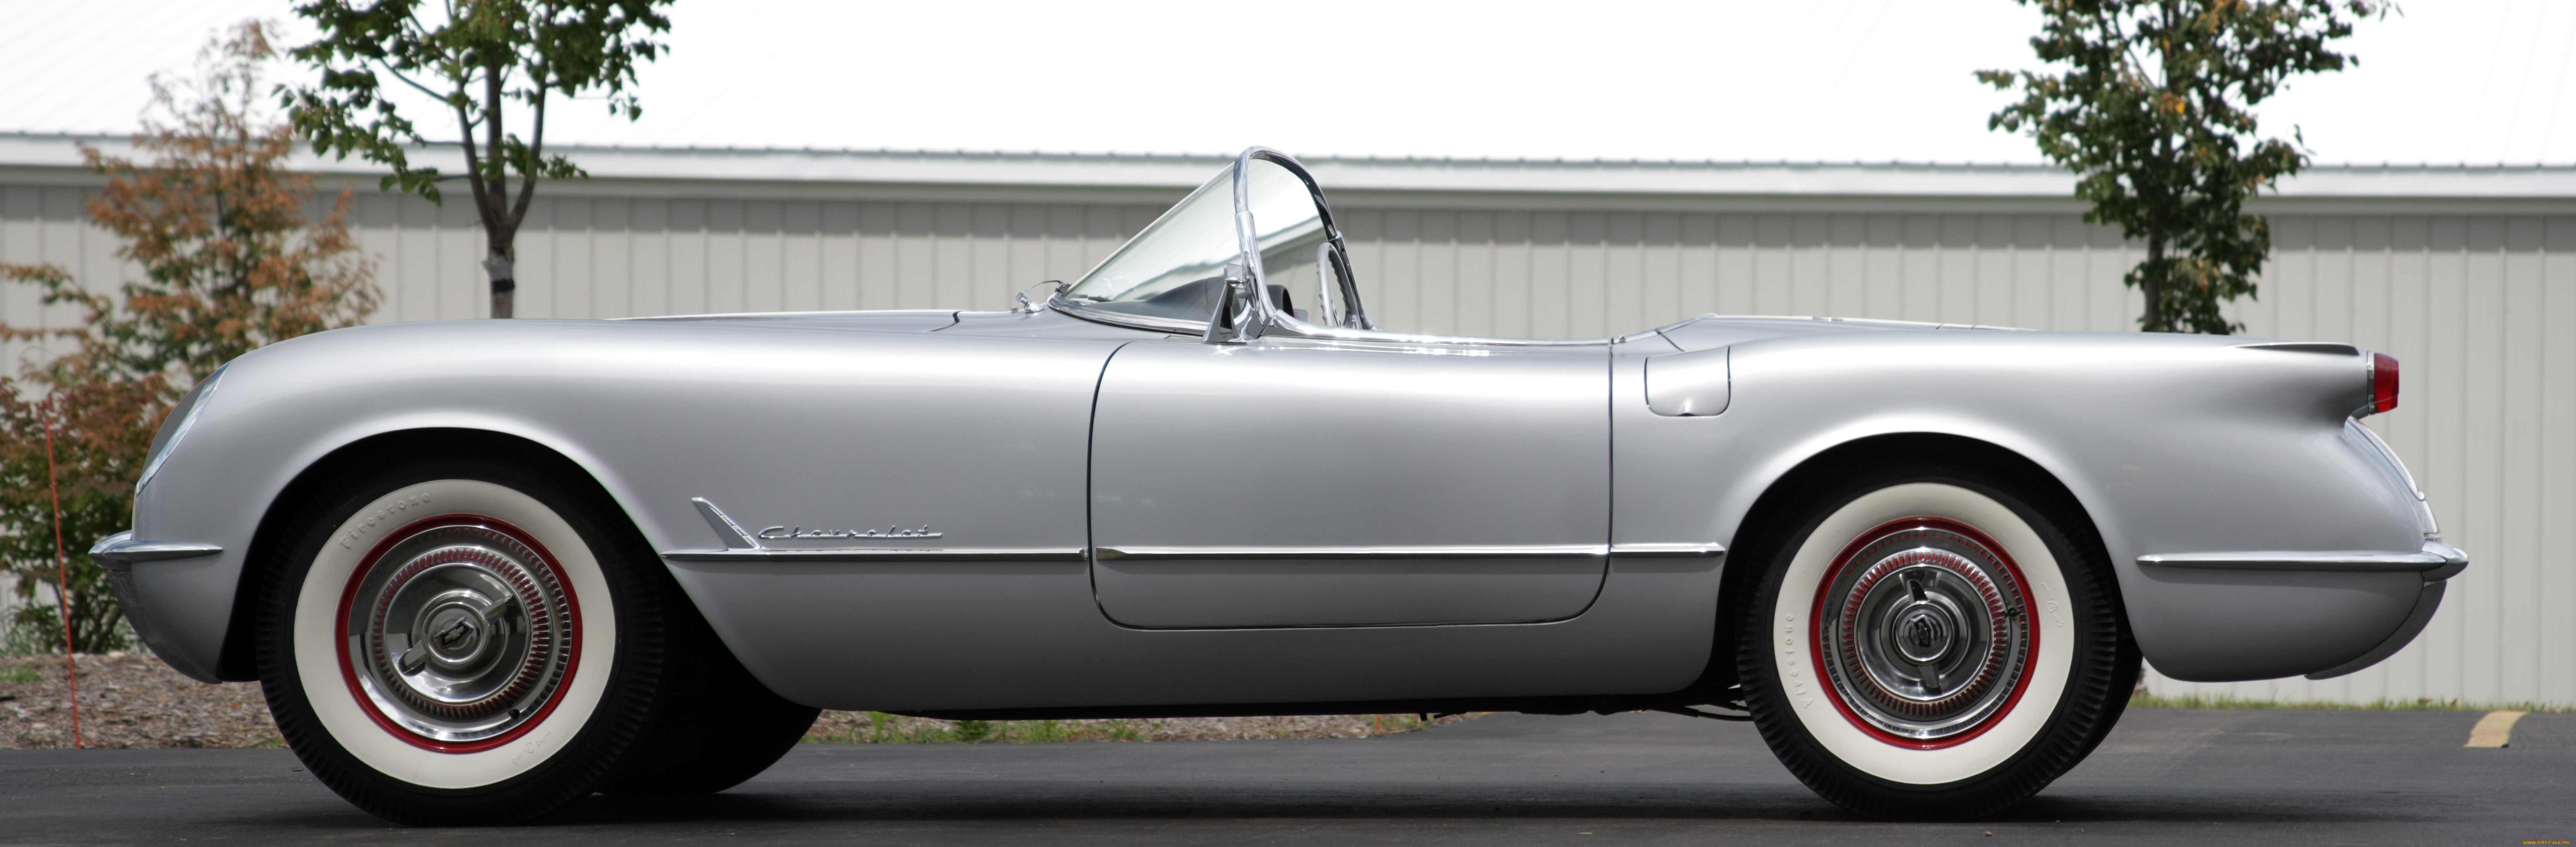 1954, styling, corvette, roadster, автомобили, спортивная, модель, авто